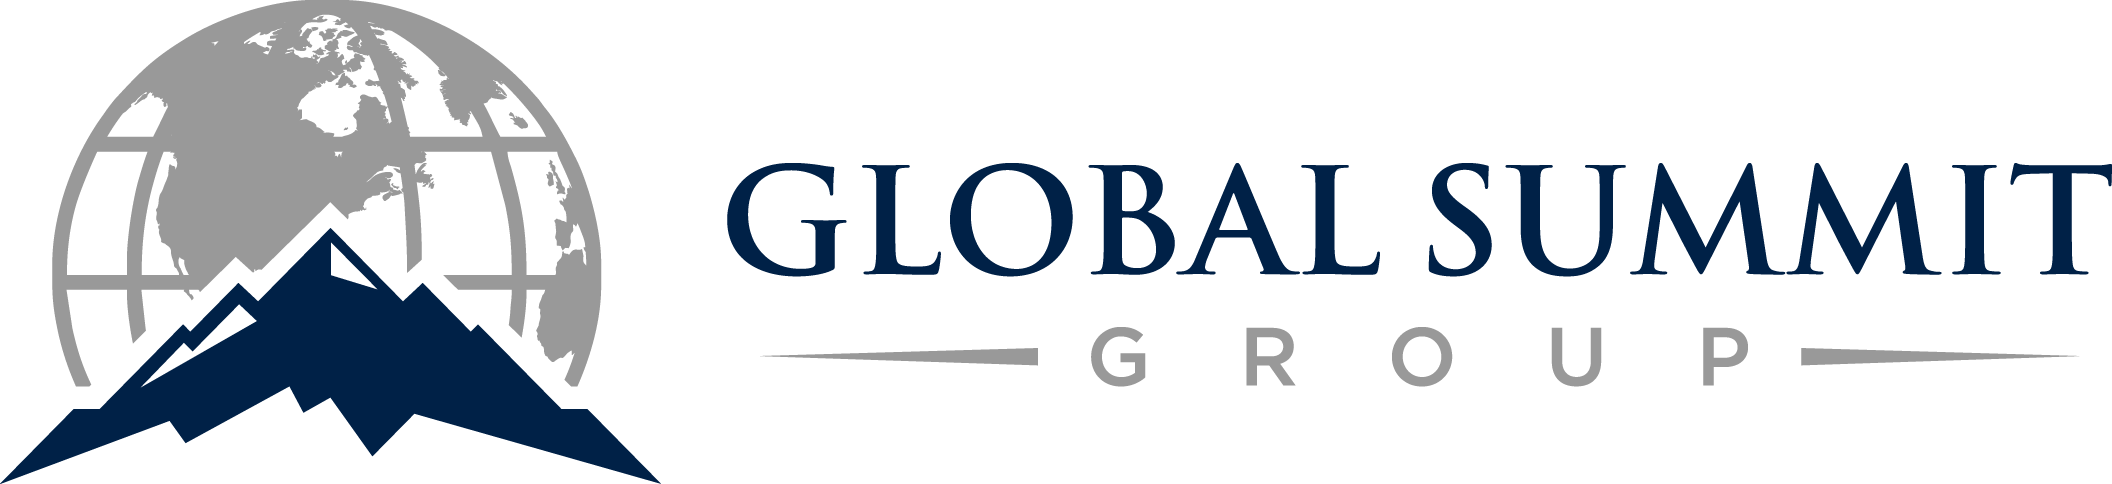 Global Summit Group